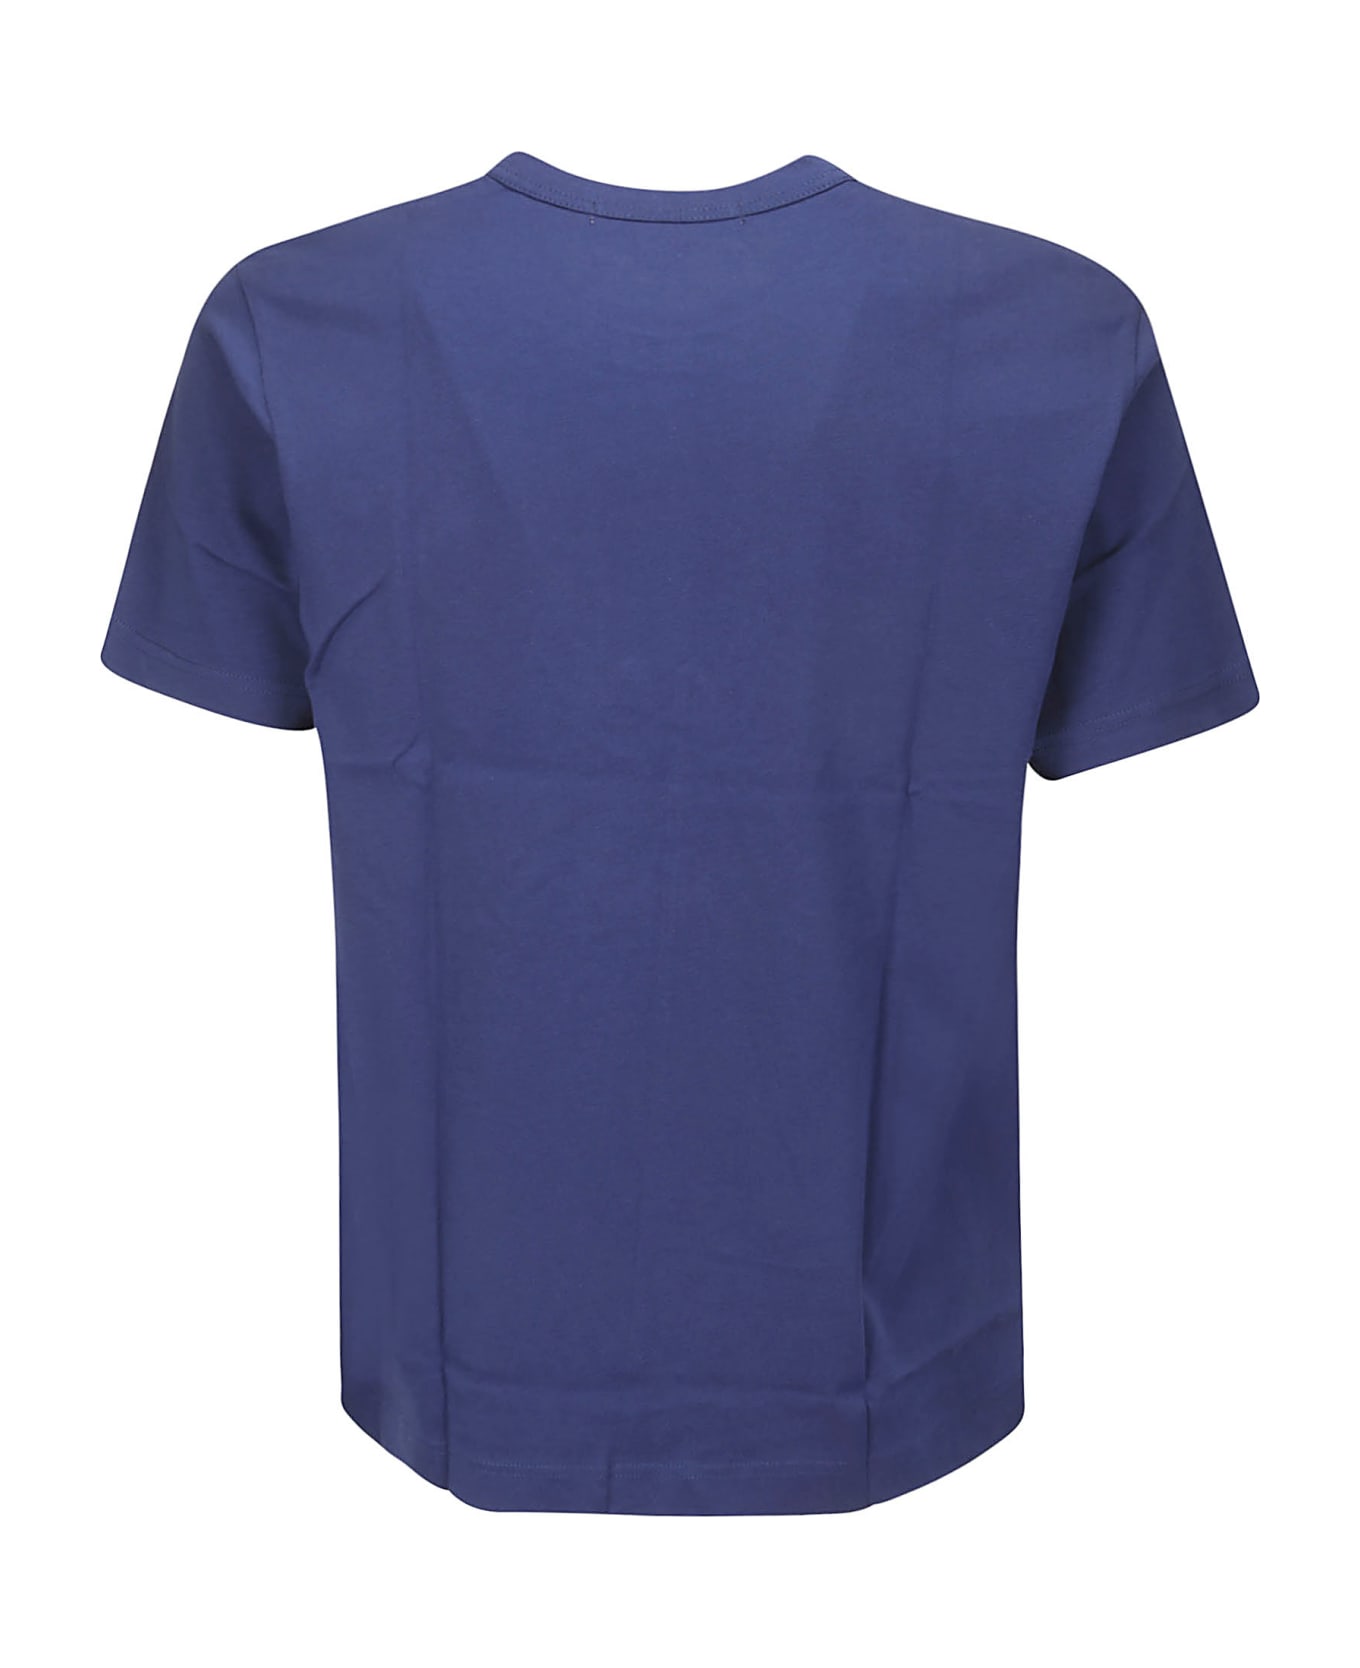 Comme des Garçons Shirt Cotton Jersey Plain With Printed Cdg Shirt L - NAVY シャツ